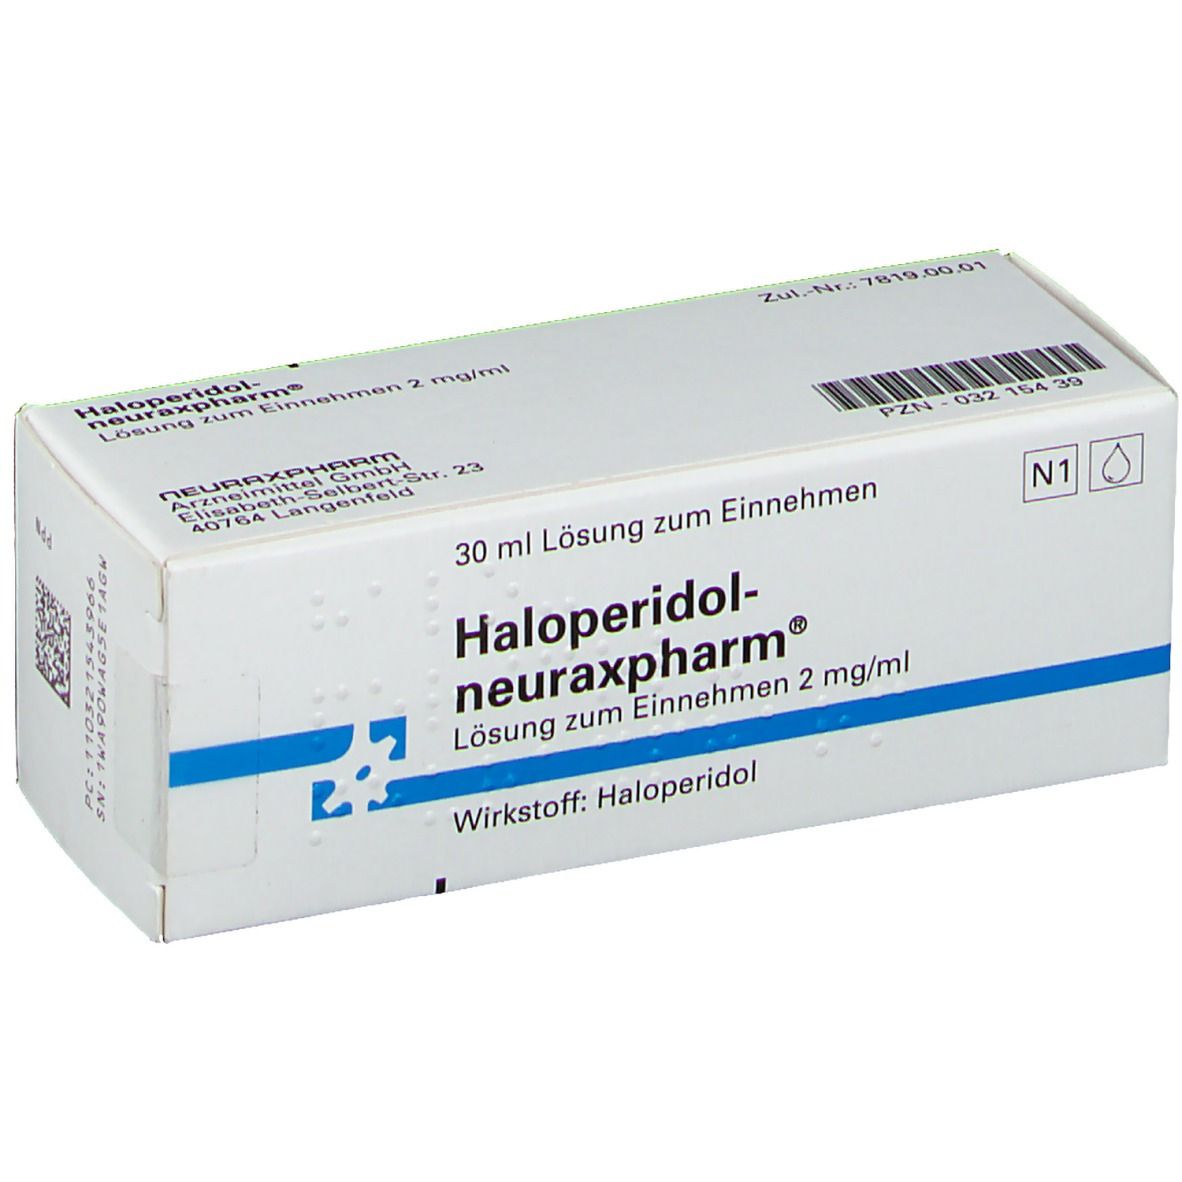 Haloperidol-neuraxpharm® 2 mg/ml